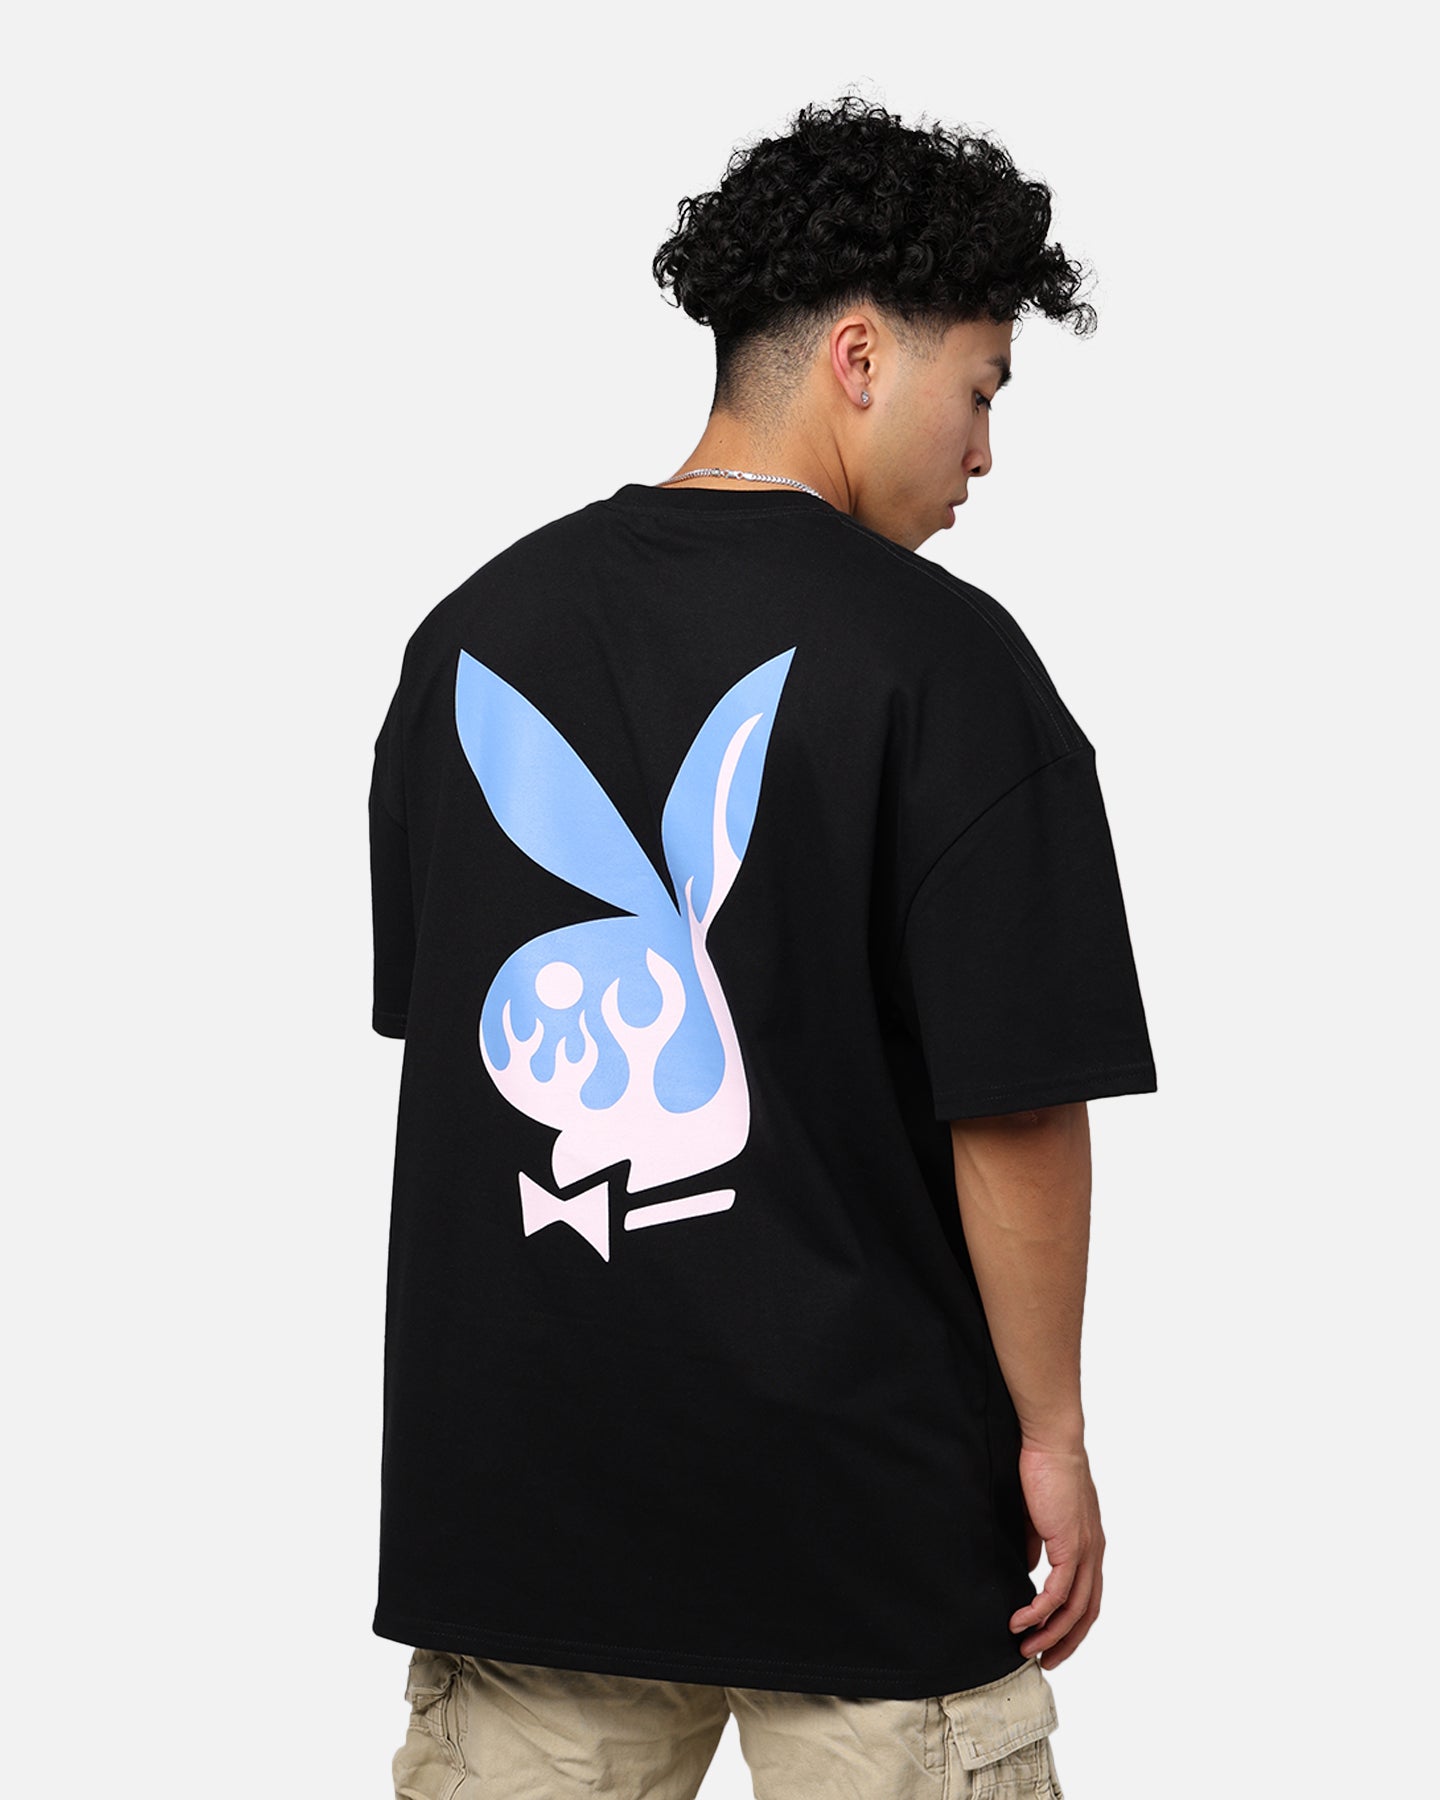 Playboy By Culture Kings Lit Bunny T-Shirt Black